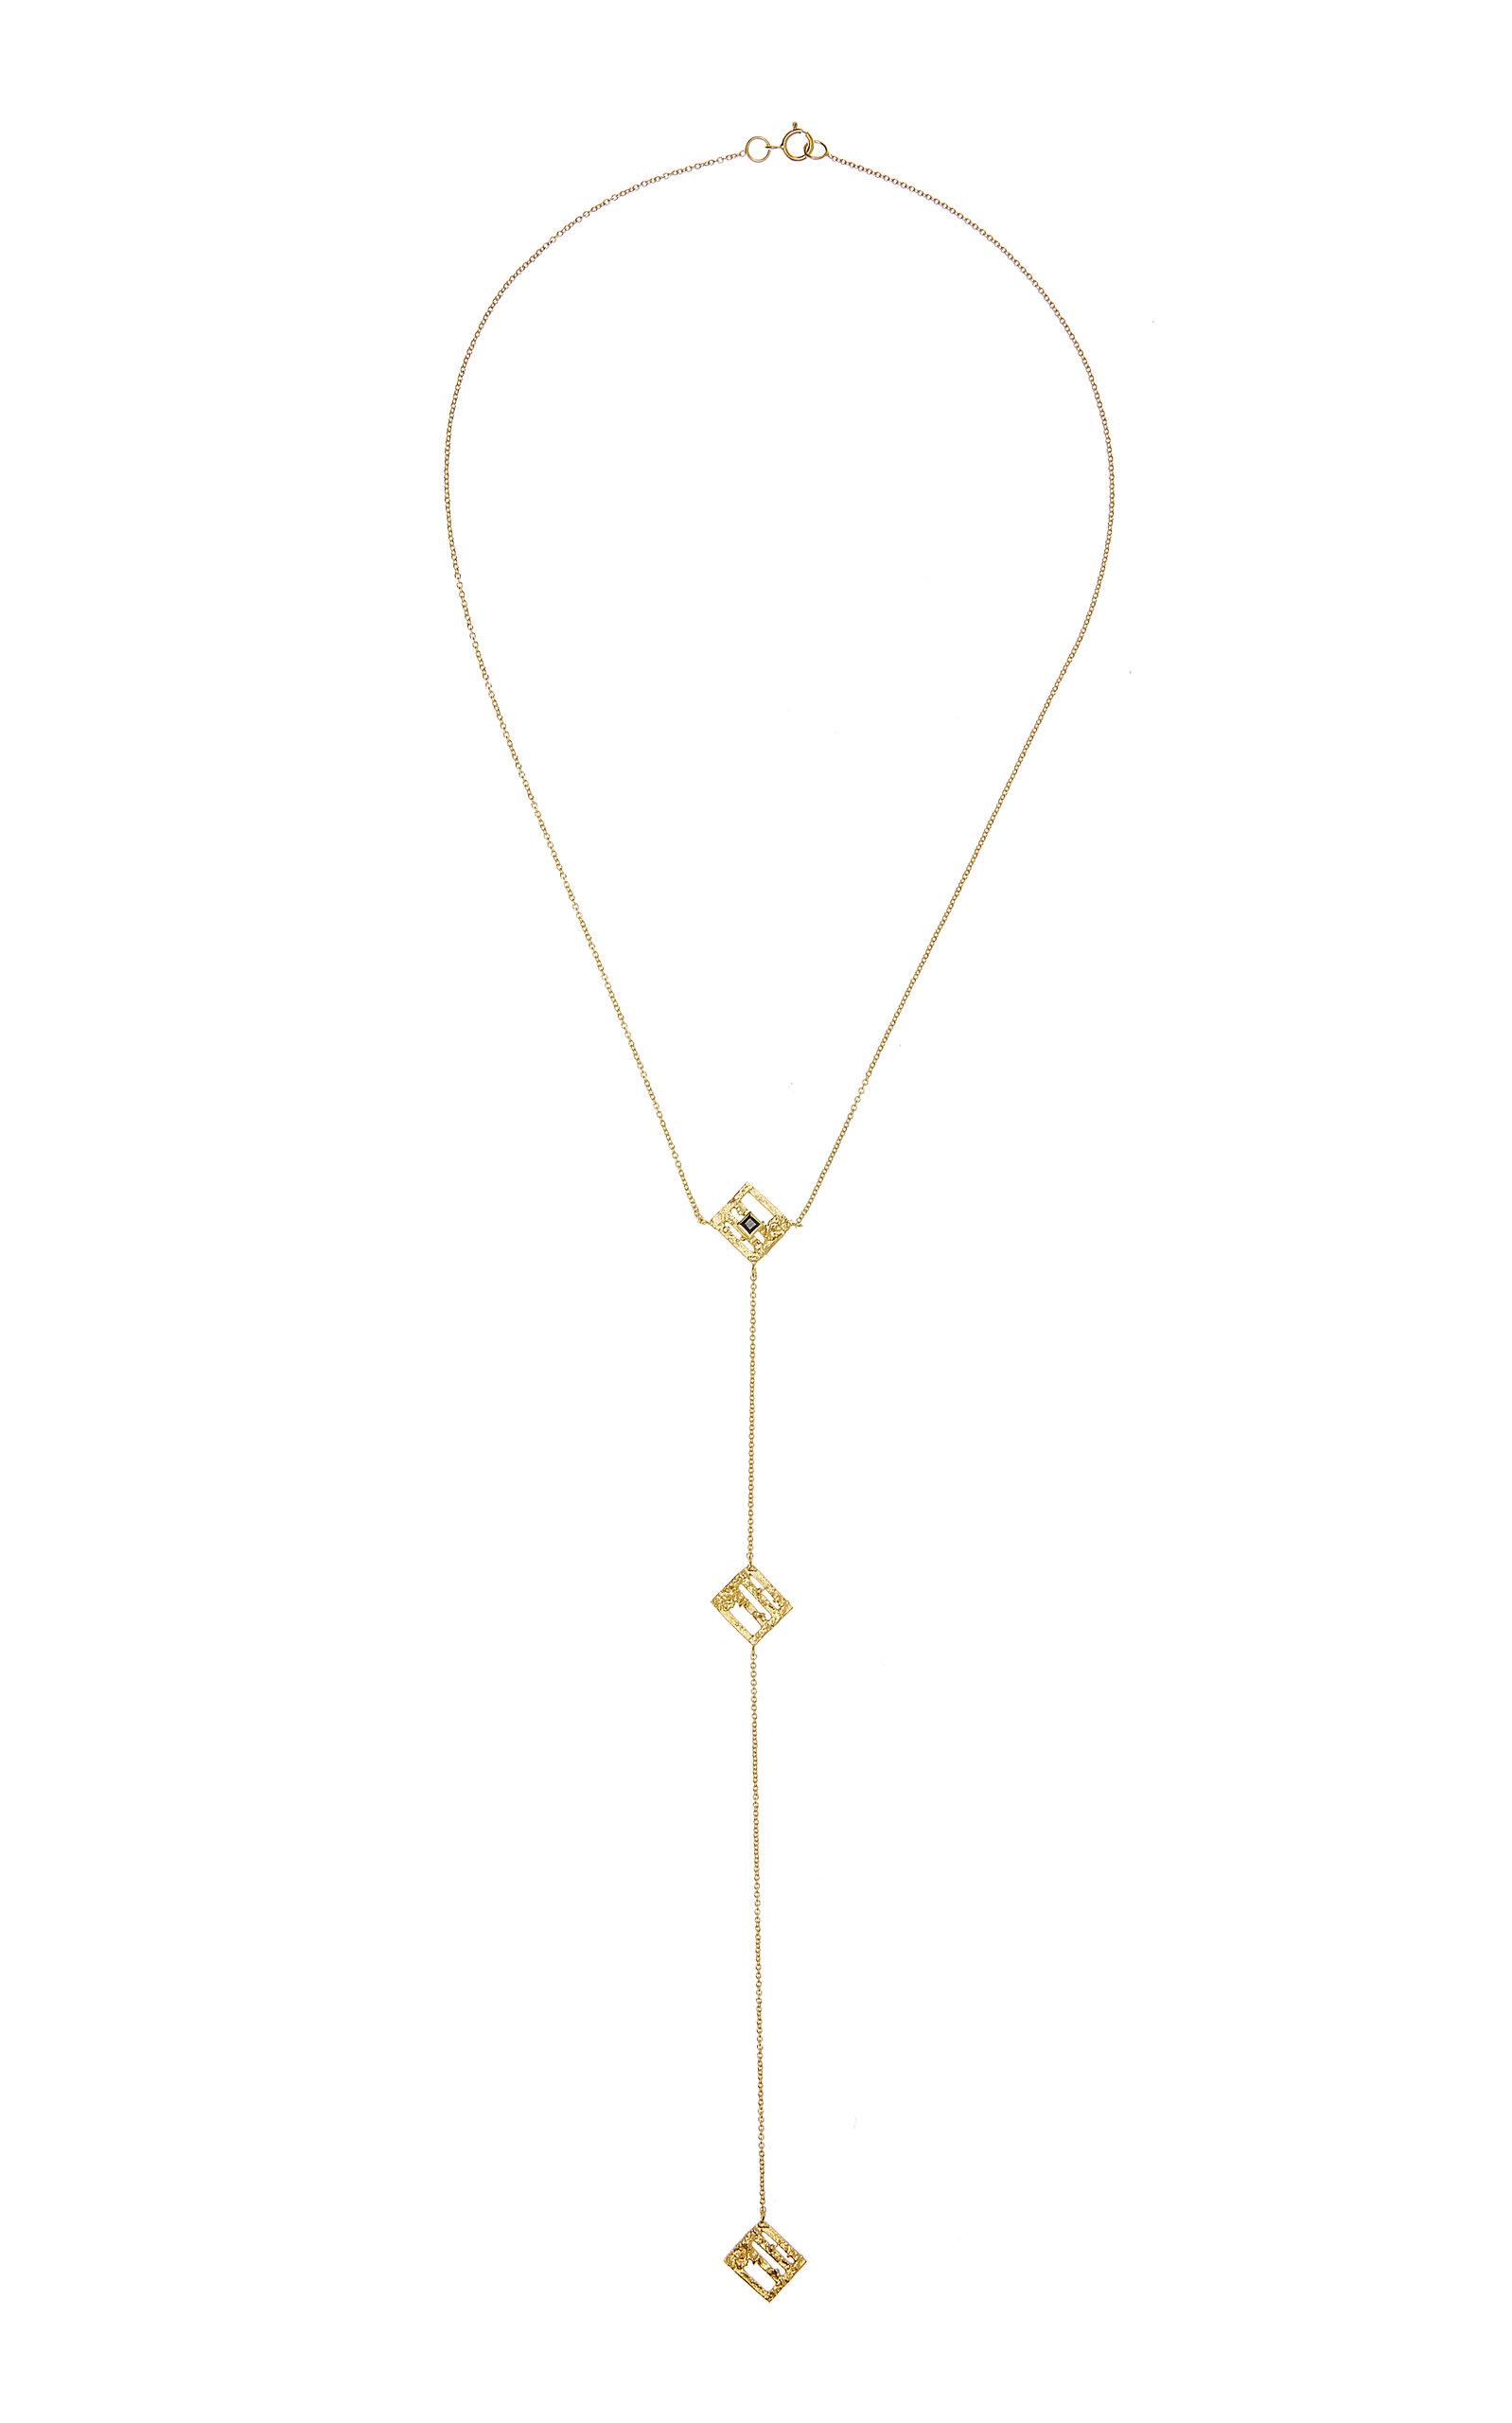 Khaite - Women's x Elhanati 24K Gold-Plated Lariat Necklace - Gold - OS - Moda Operandi - Gifts For Her